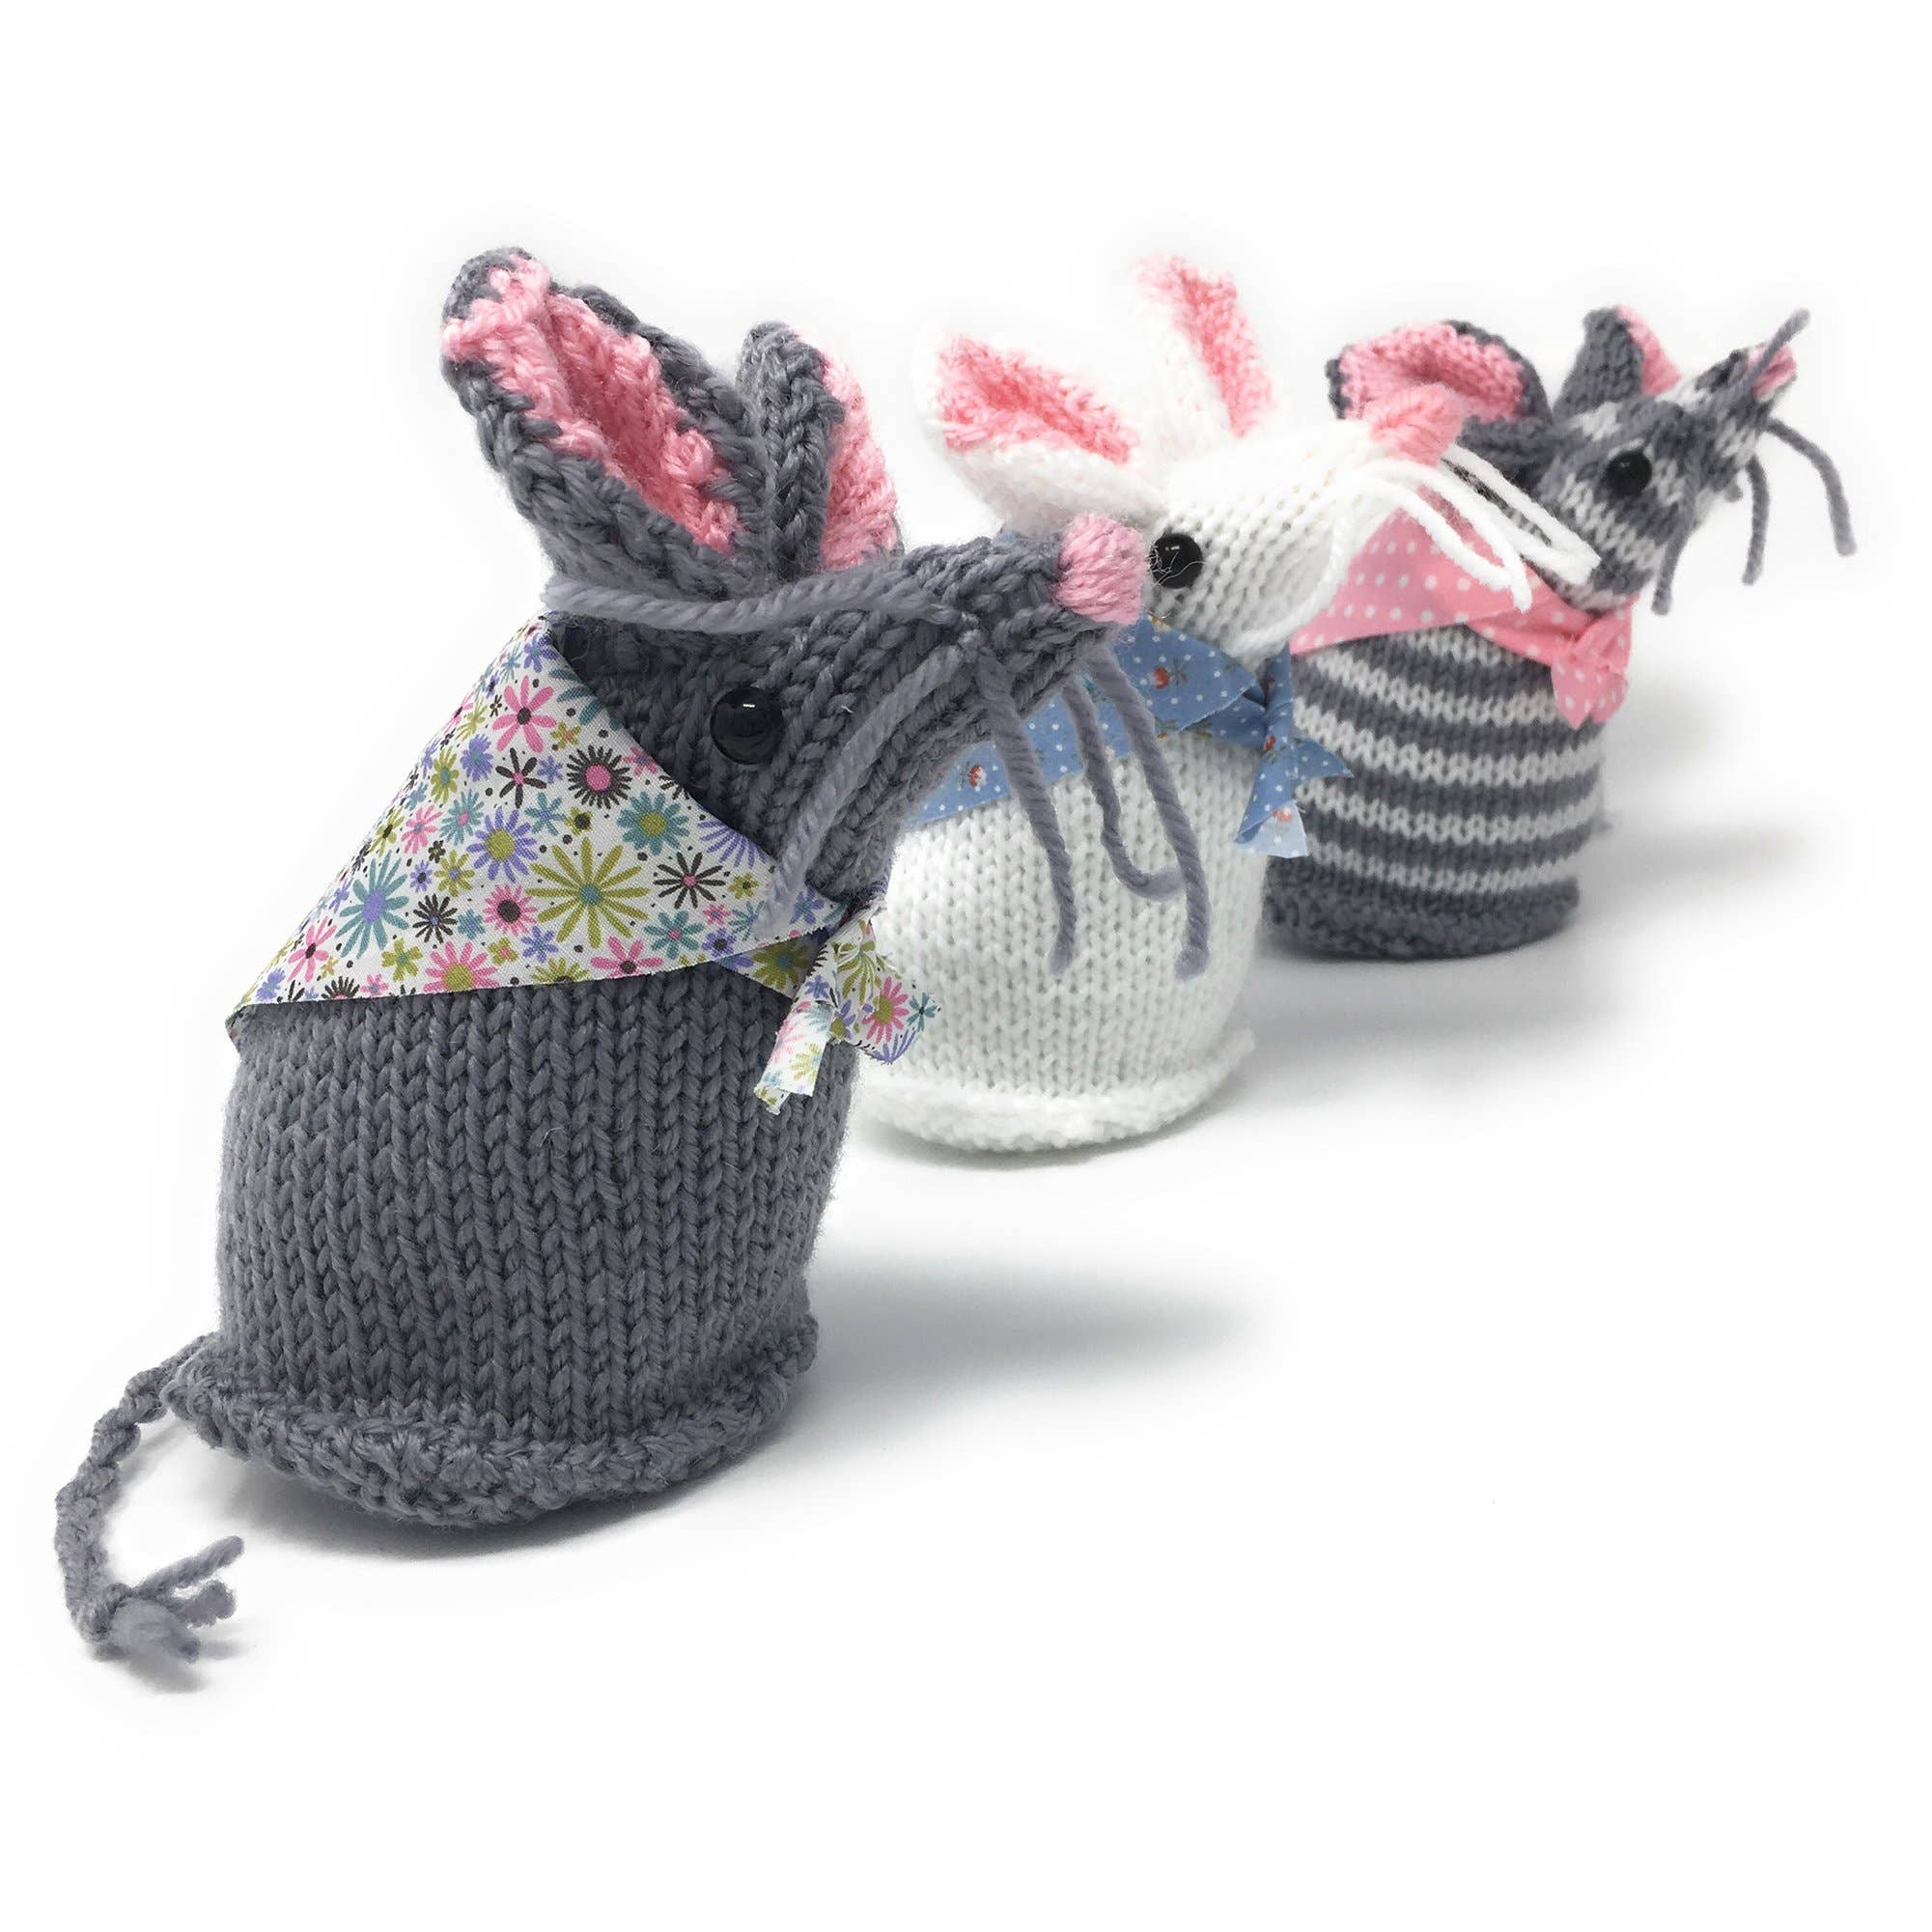 The Crafty Kit Company - Mary Mouse & Friends Knitting Kit